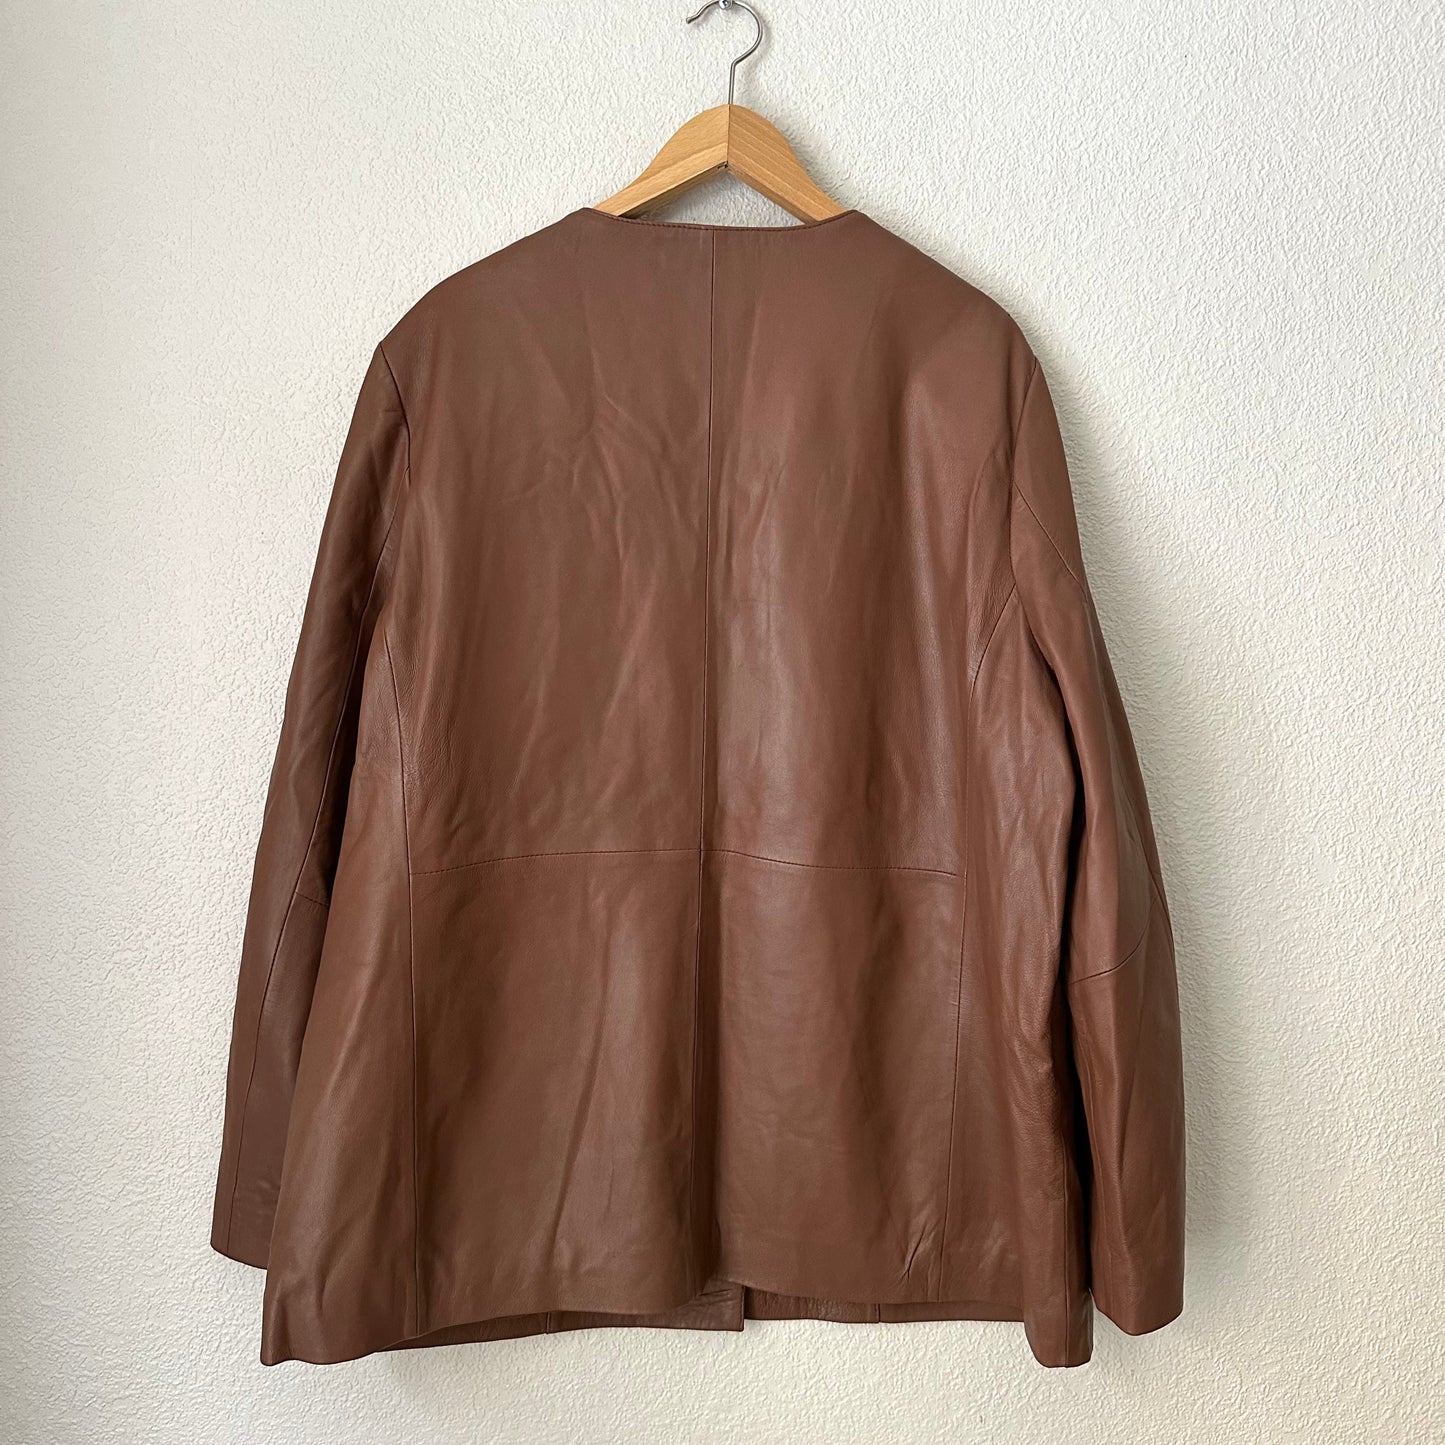 Muubaa Collarless Leather Blazer in Chocolate Brown, NEW, Size L